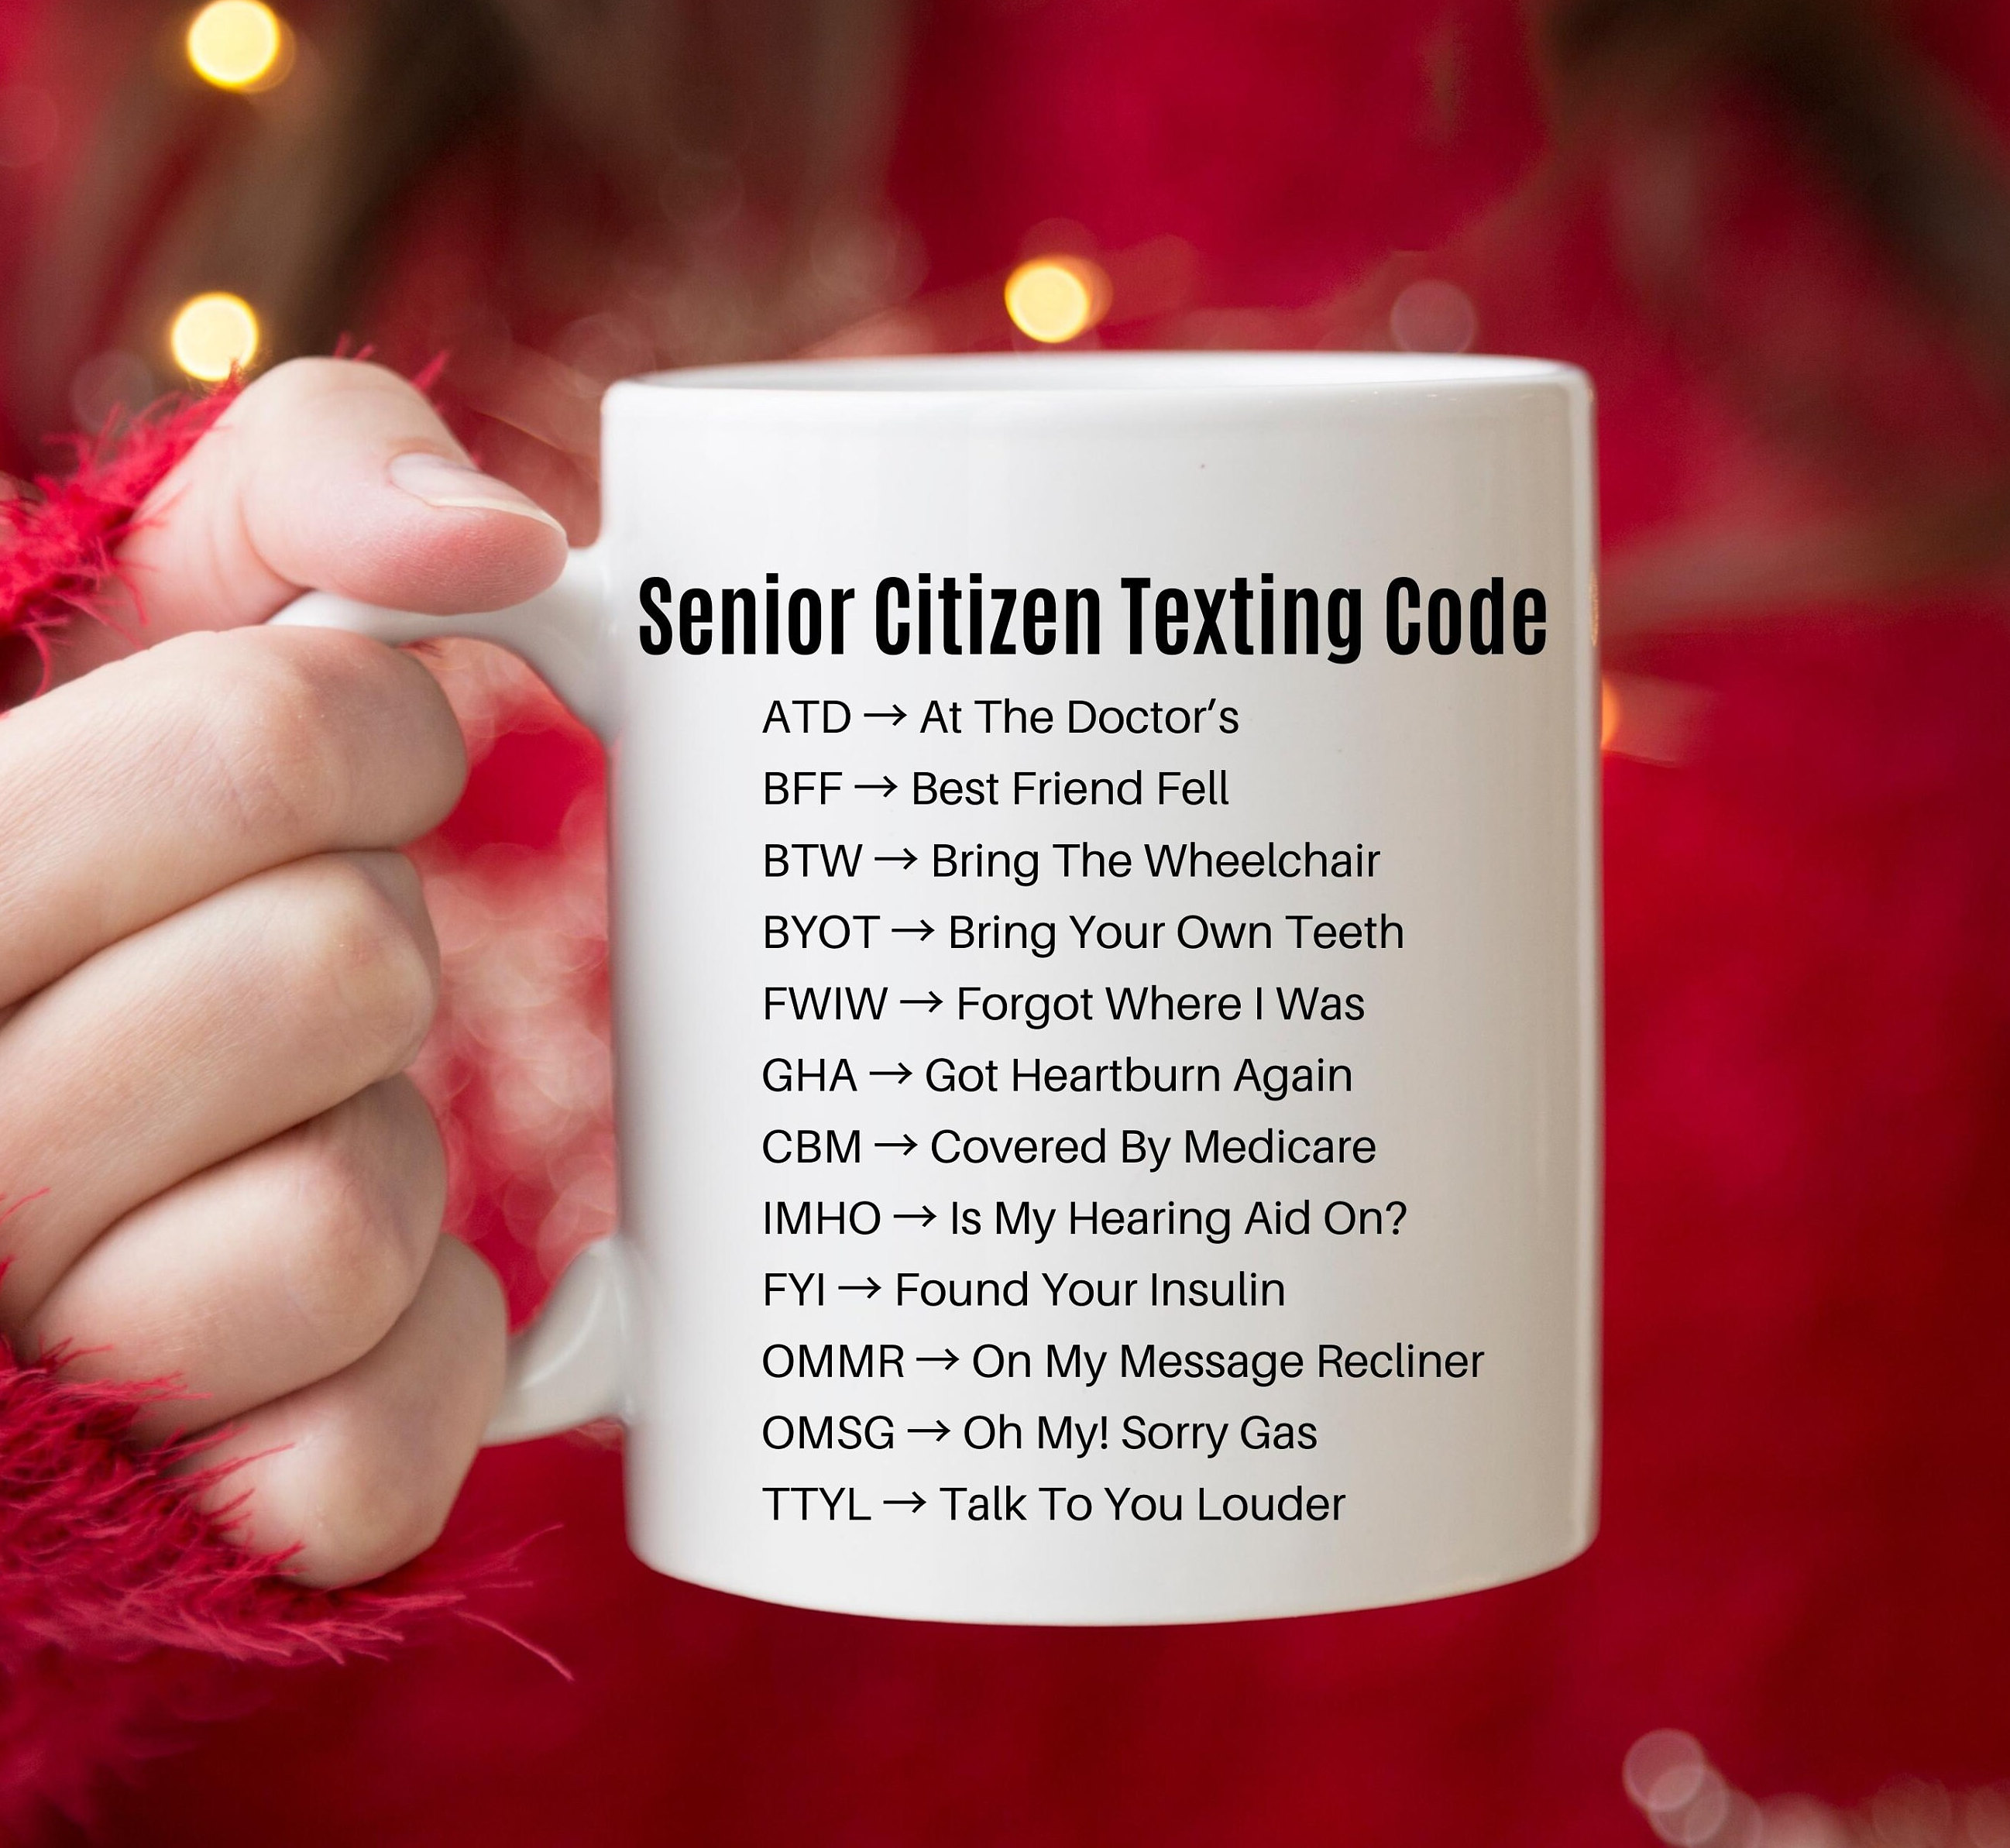 Senior Citizen Texting Code Mug, Gifts For Senior Citizens, Gift For Senior  Women And Men, Funny Gag Gifts For Older People, Senior Citizen